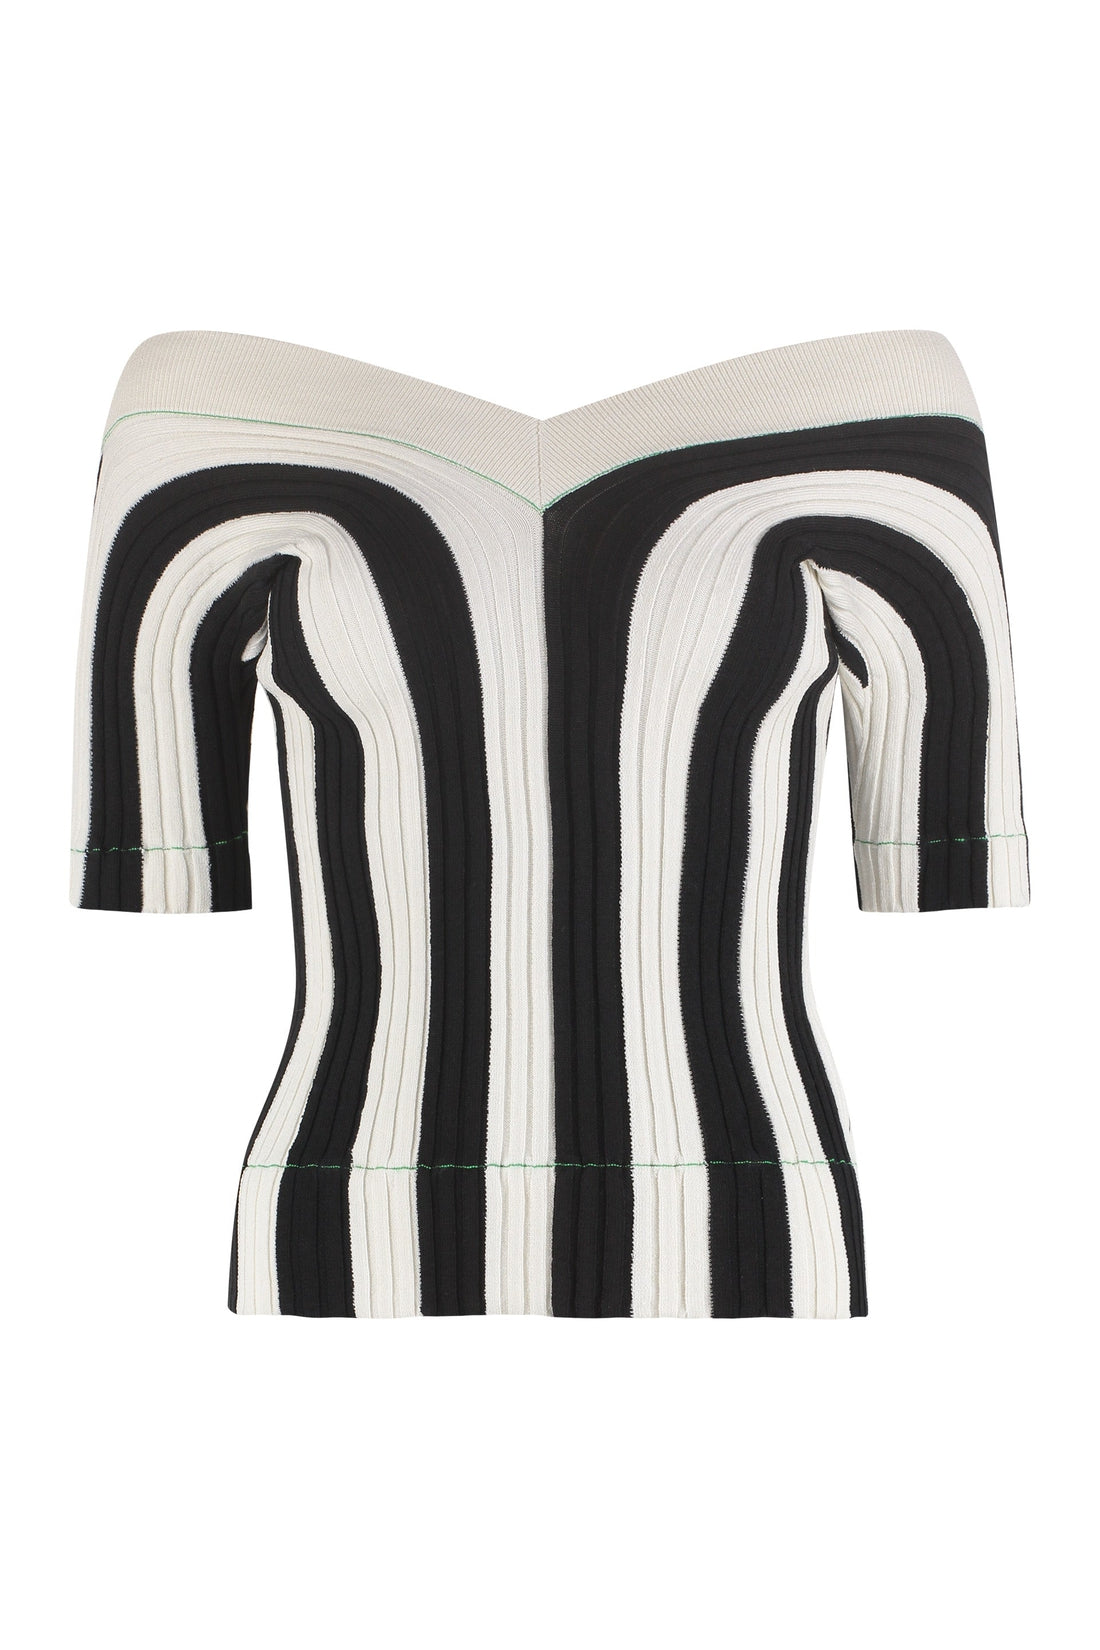 Bottega Veneta-OUTLET-SALE-Striped knit top-ARCHIVIST